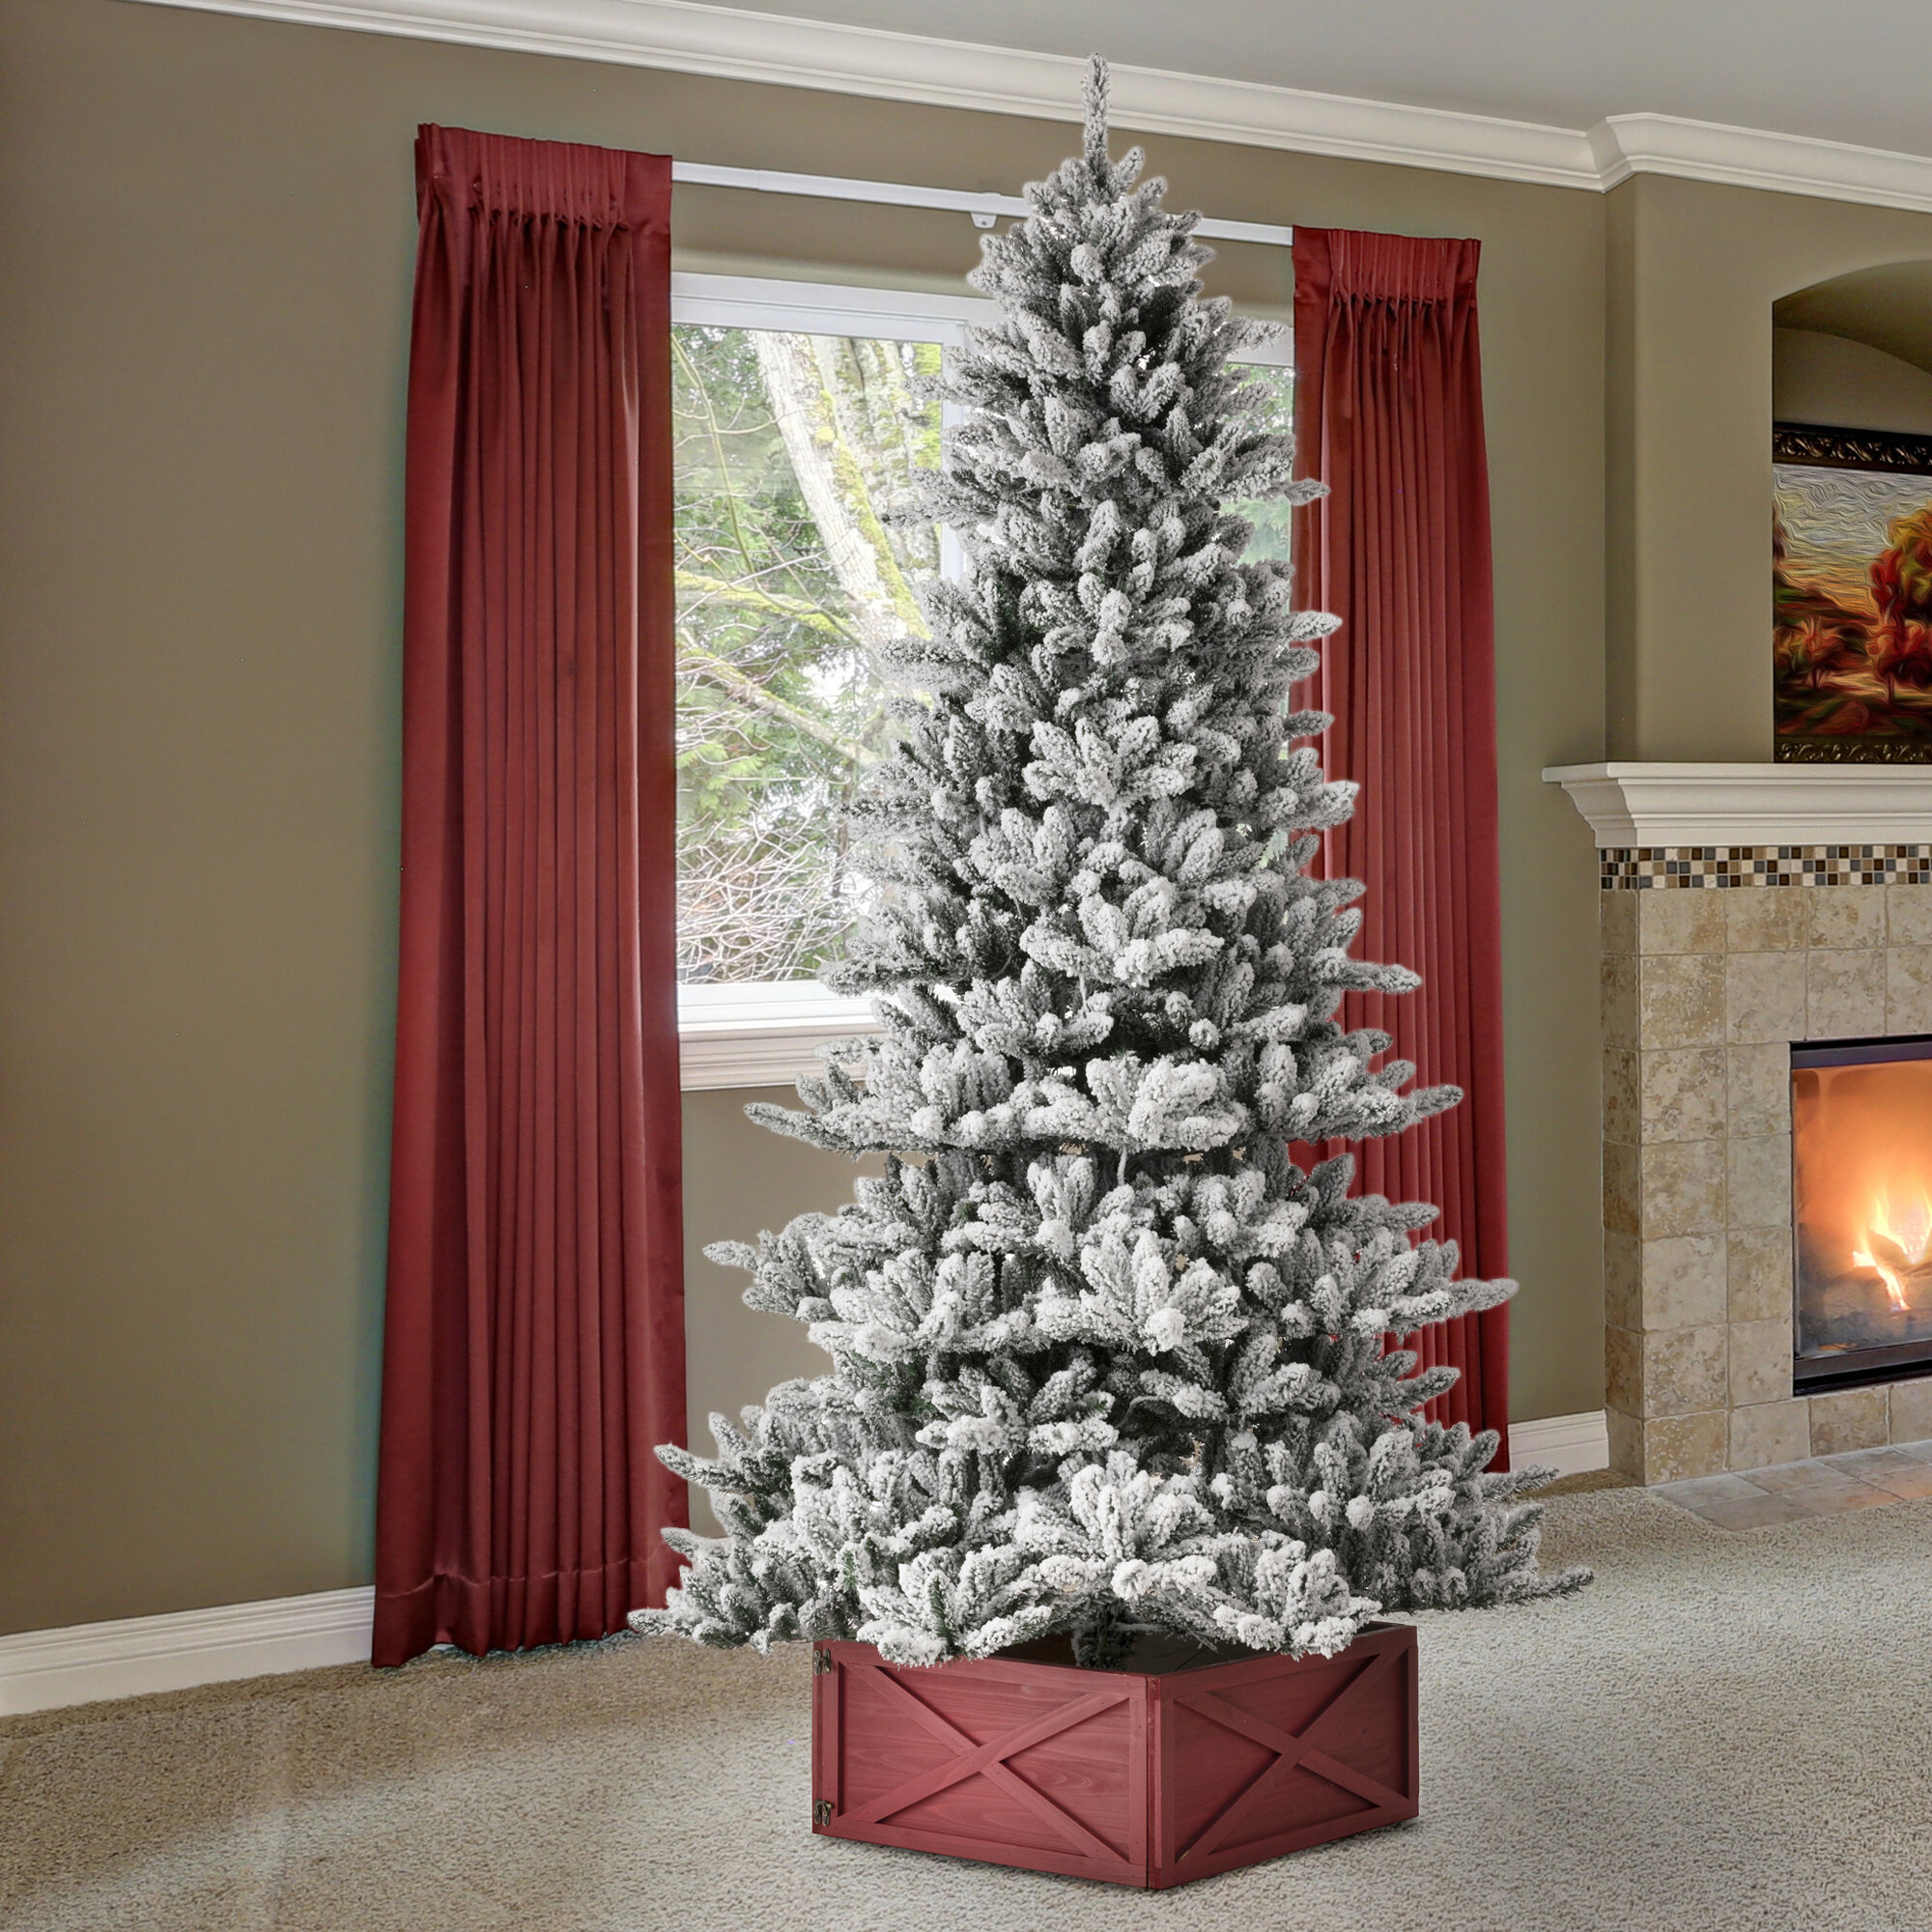 3' Prelit Flocked Pine Artificial Green Christmas Tree Indoor Holiday Decor 